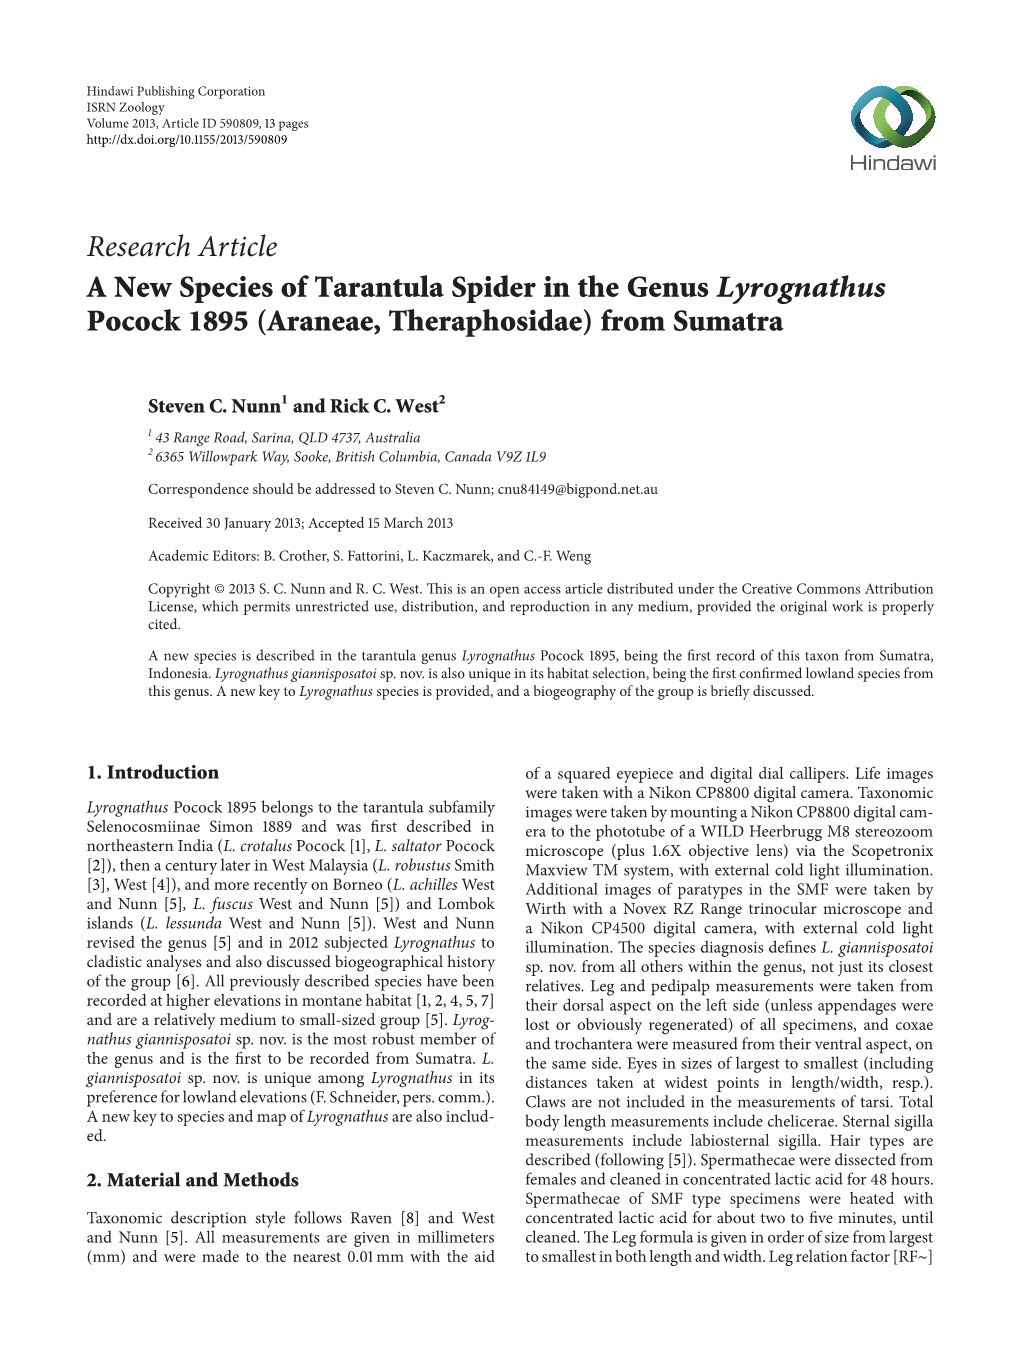 A New Species of Tarantula Spider in the Genus Lyrognathus Pocock 1895 (Araneae, Theraphosidae) from Sumatra